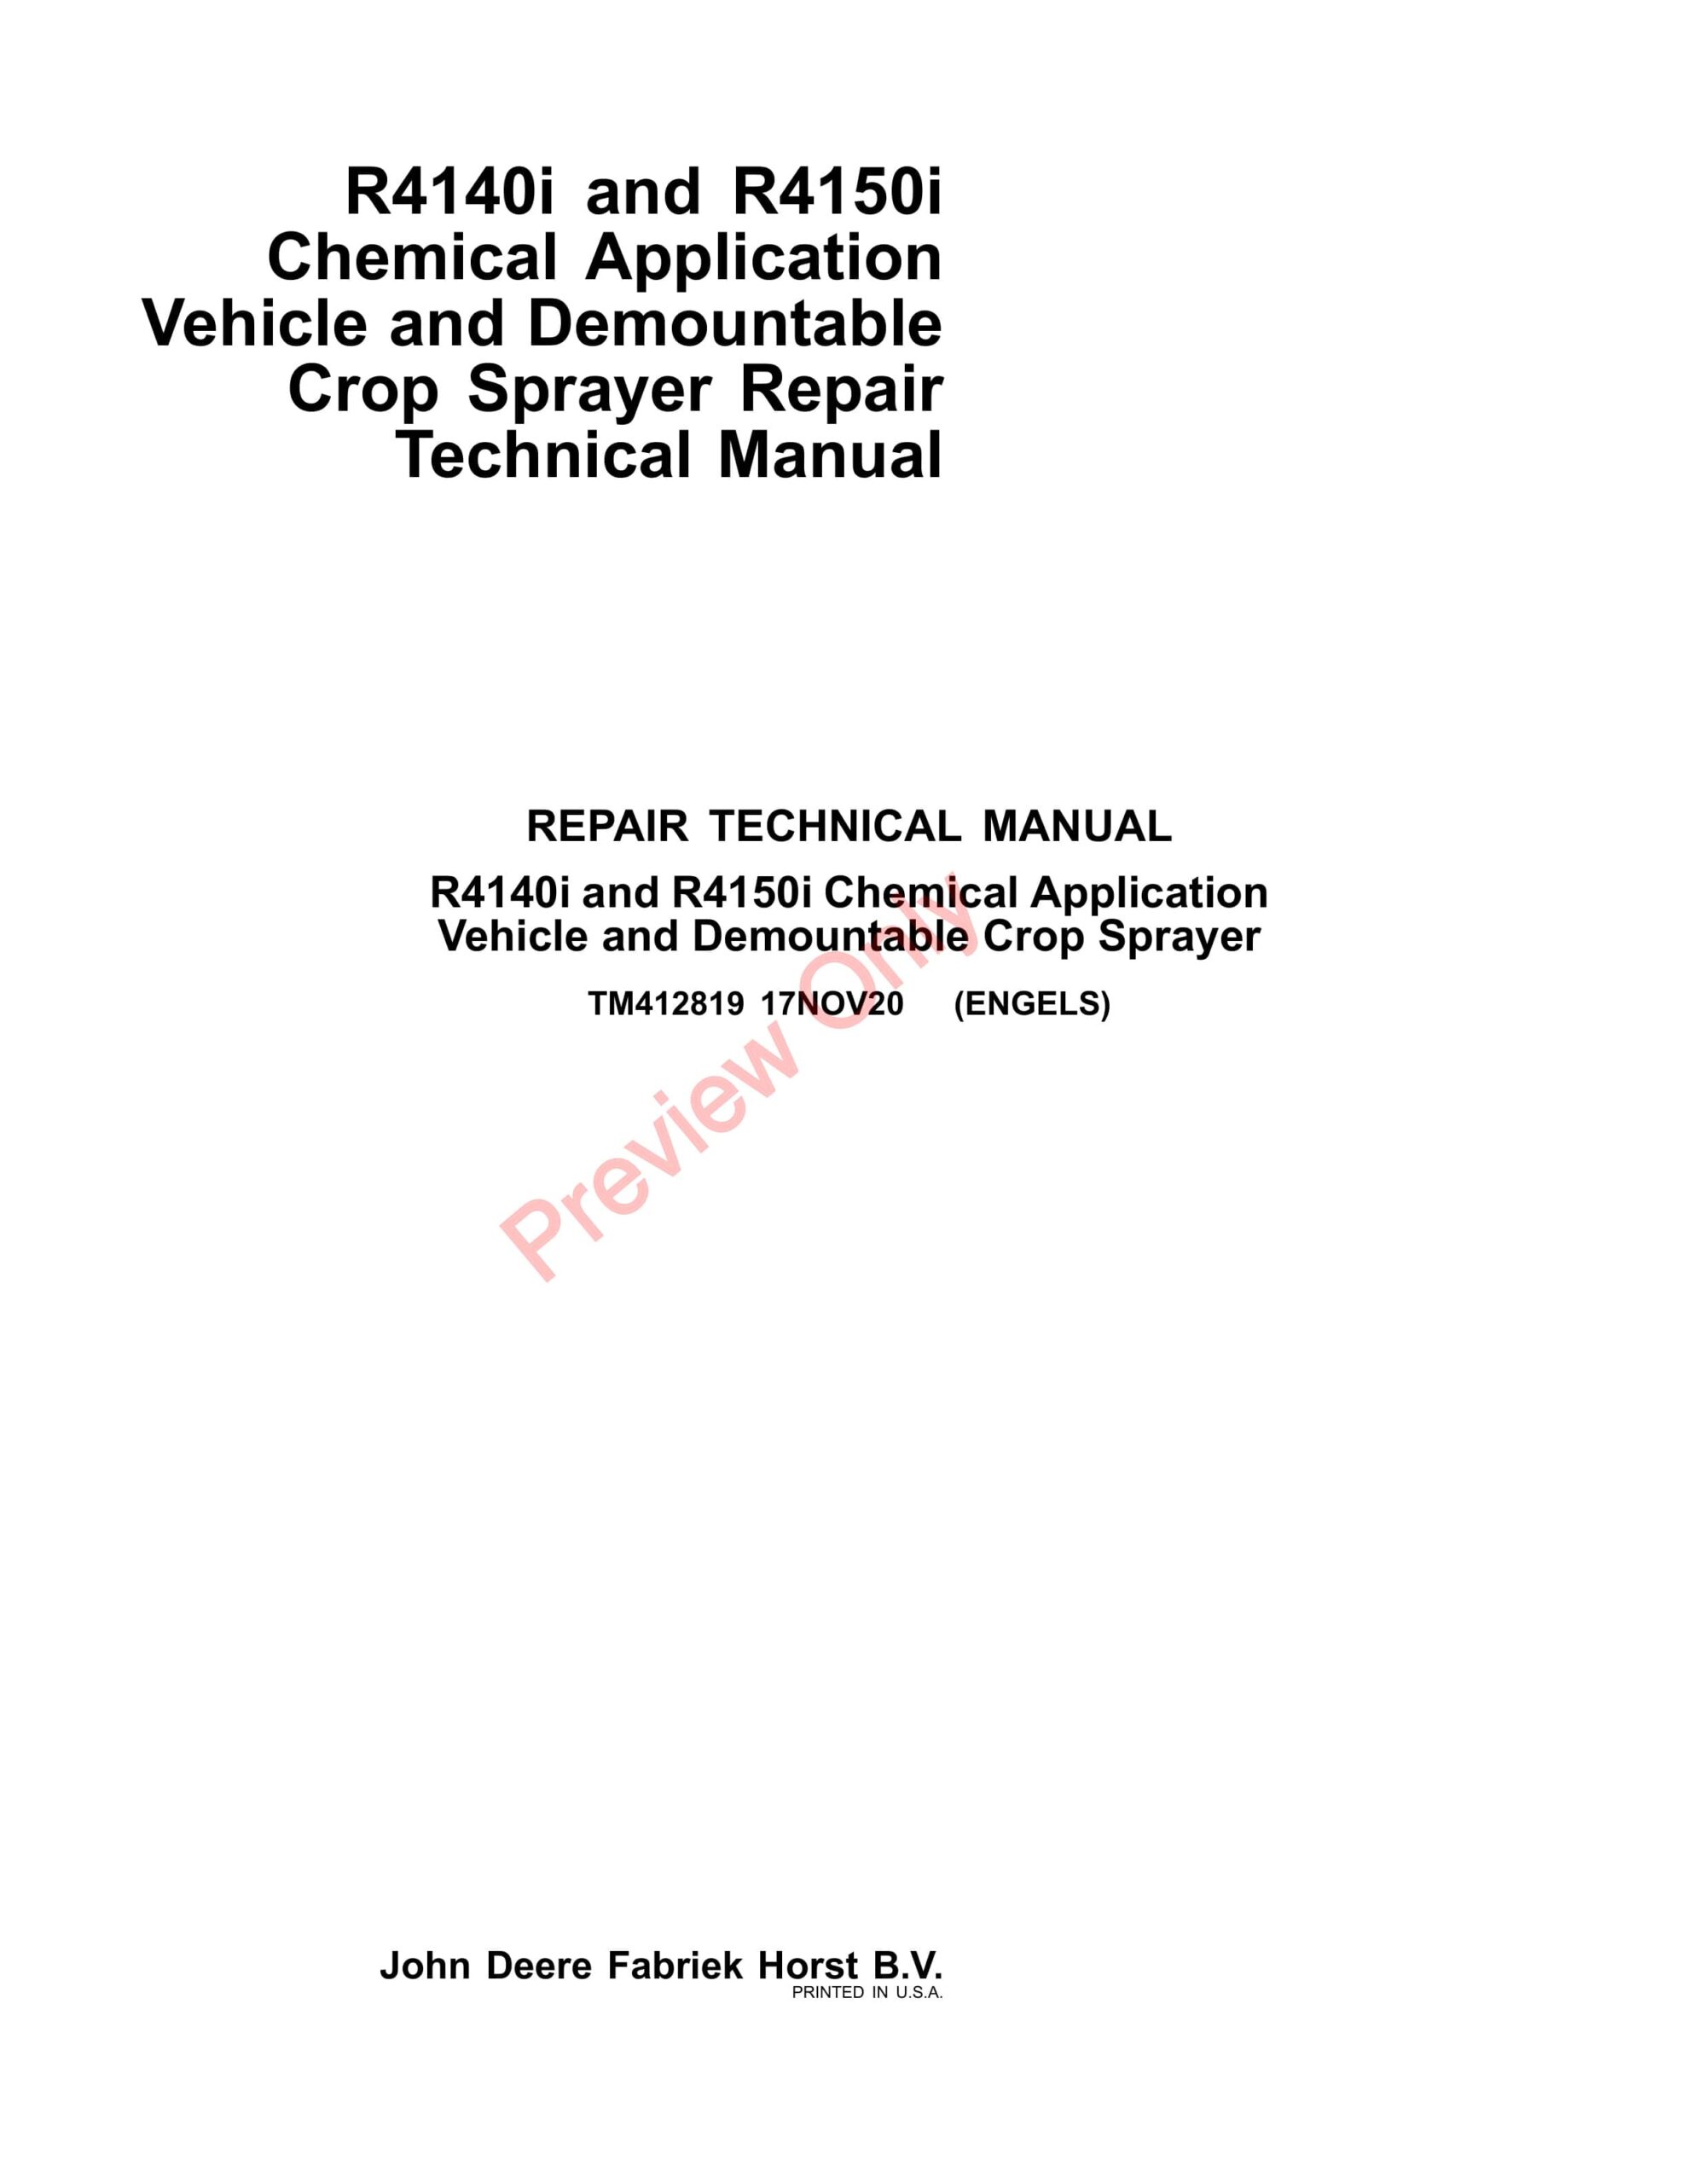 John Deere R4140i and R4150i Chemical Application Vehicle and Demountable Crop Sprayer Repair Technical Manual TM412819 22MAR23-1